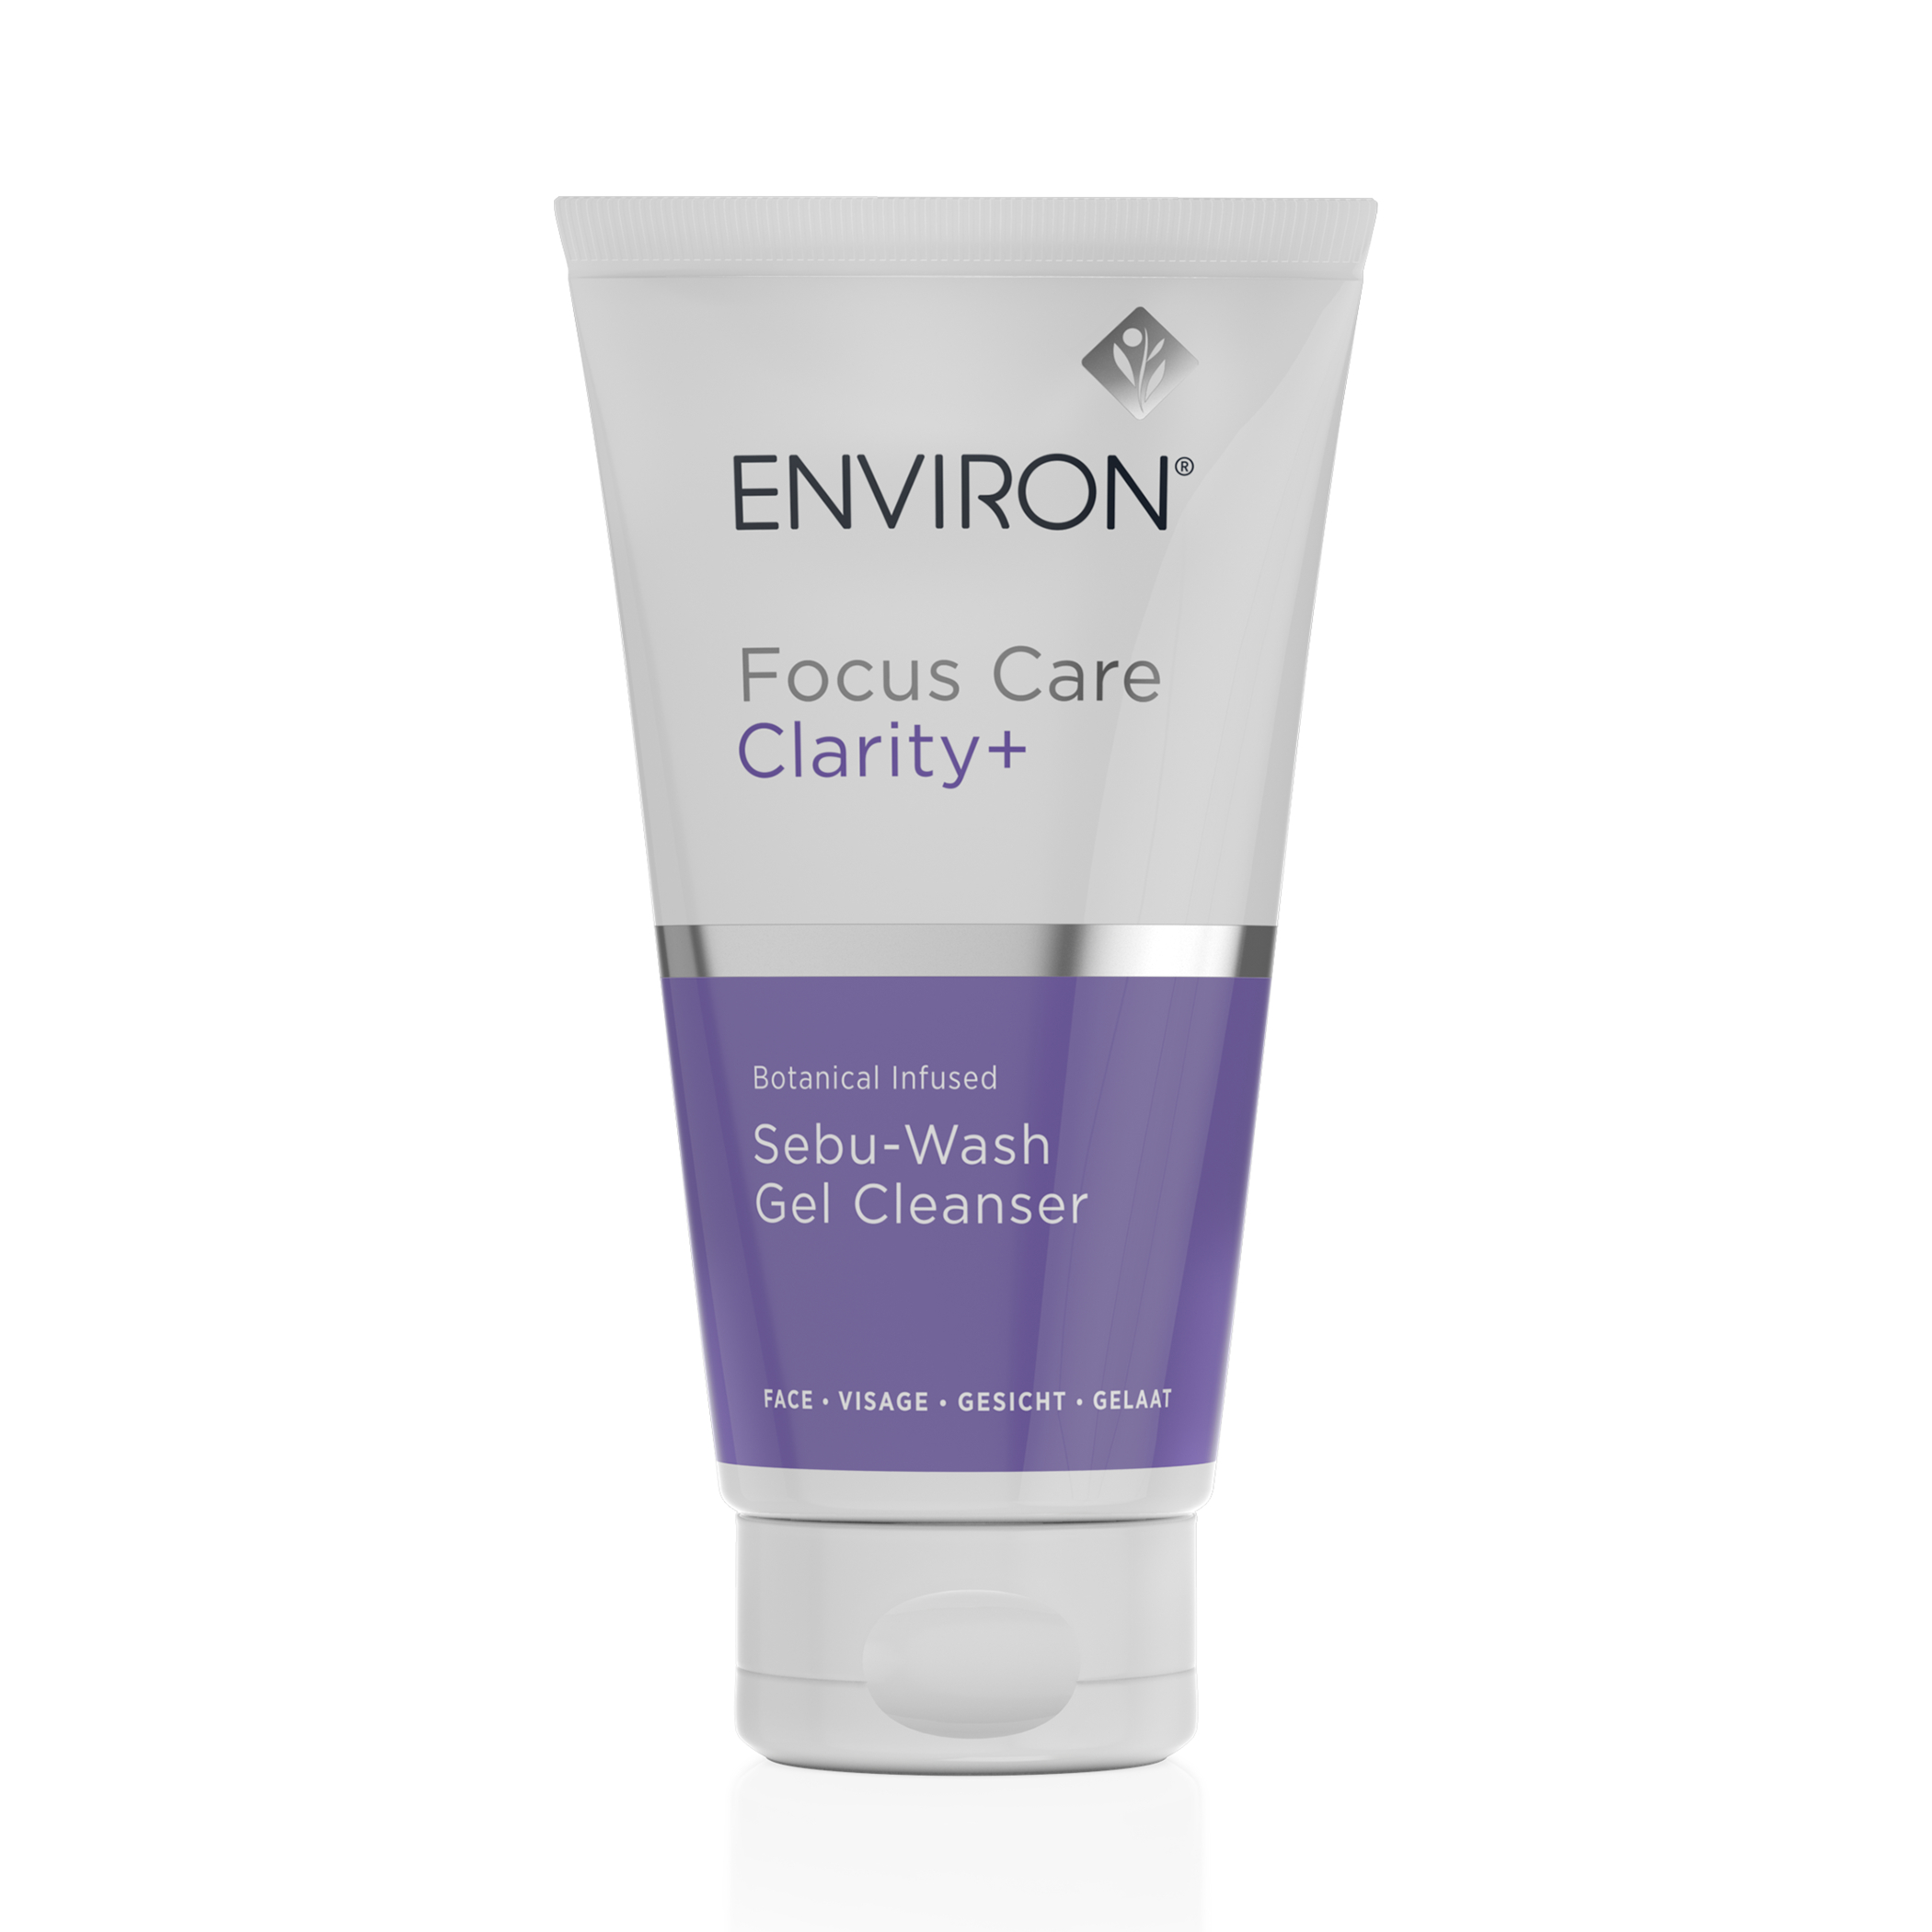 Environ Focus Care Clarity+ Sebu-Wash Gel Cleanser 150ml | Australia